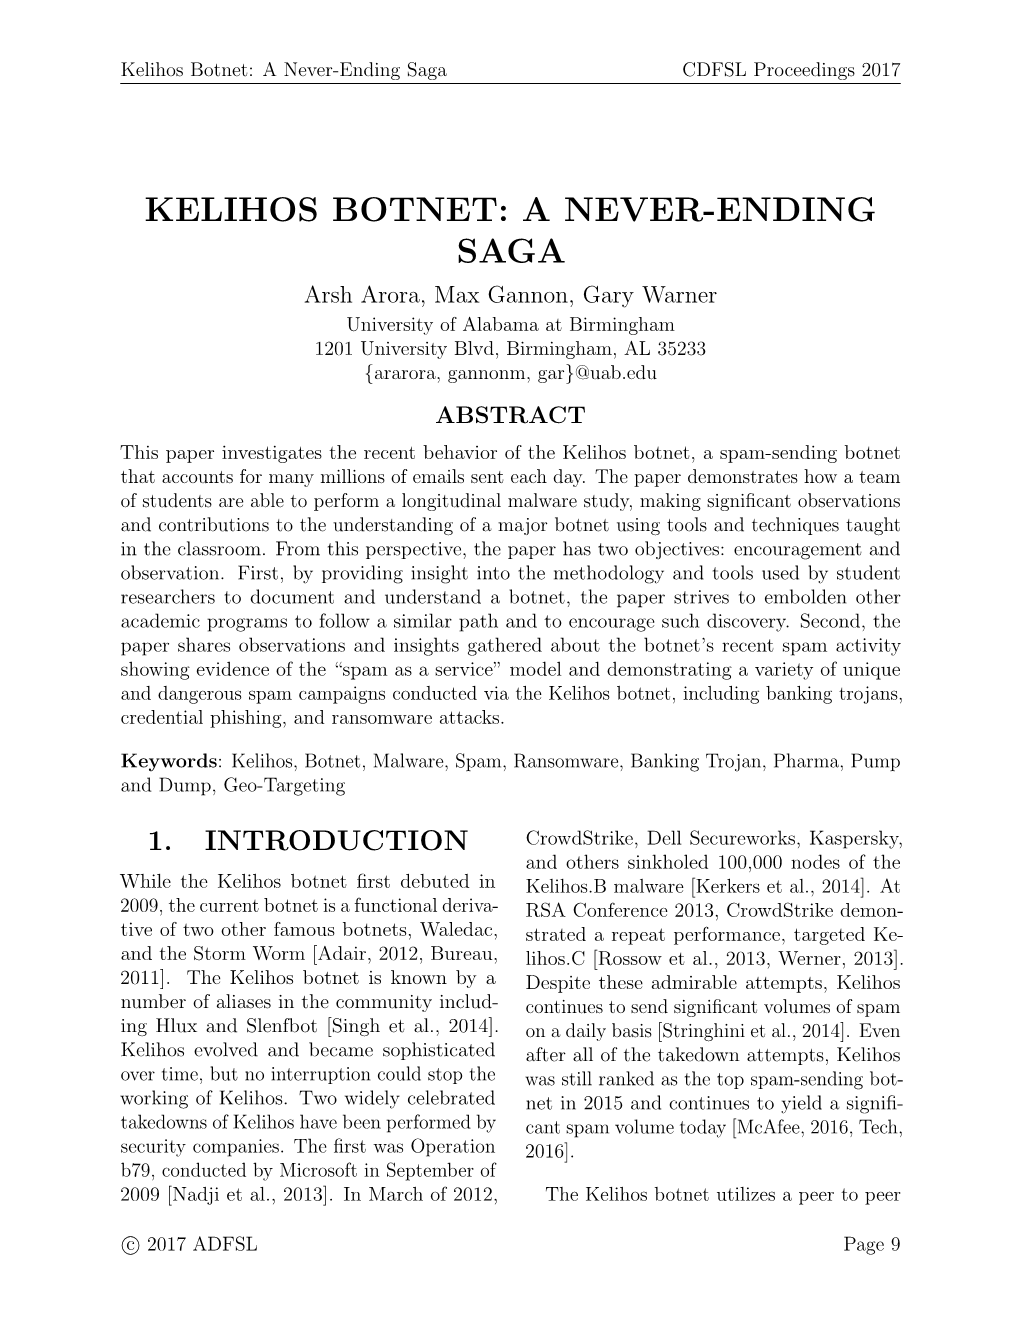 Kelihos Botnet: a Never-Ending Saga CDFSL Proceedings 2017